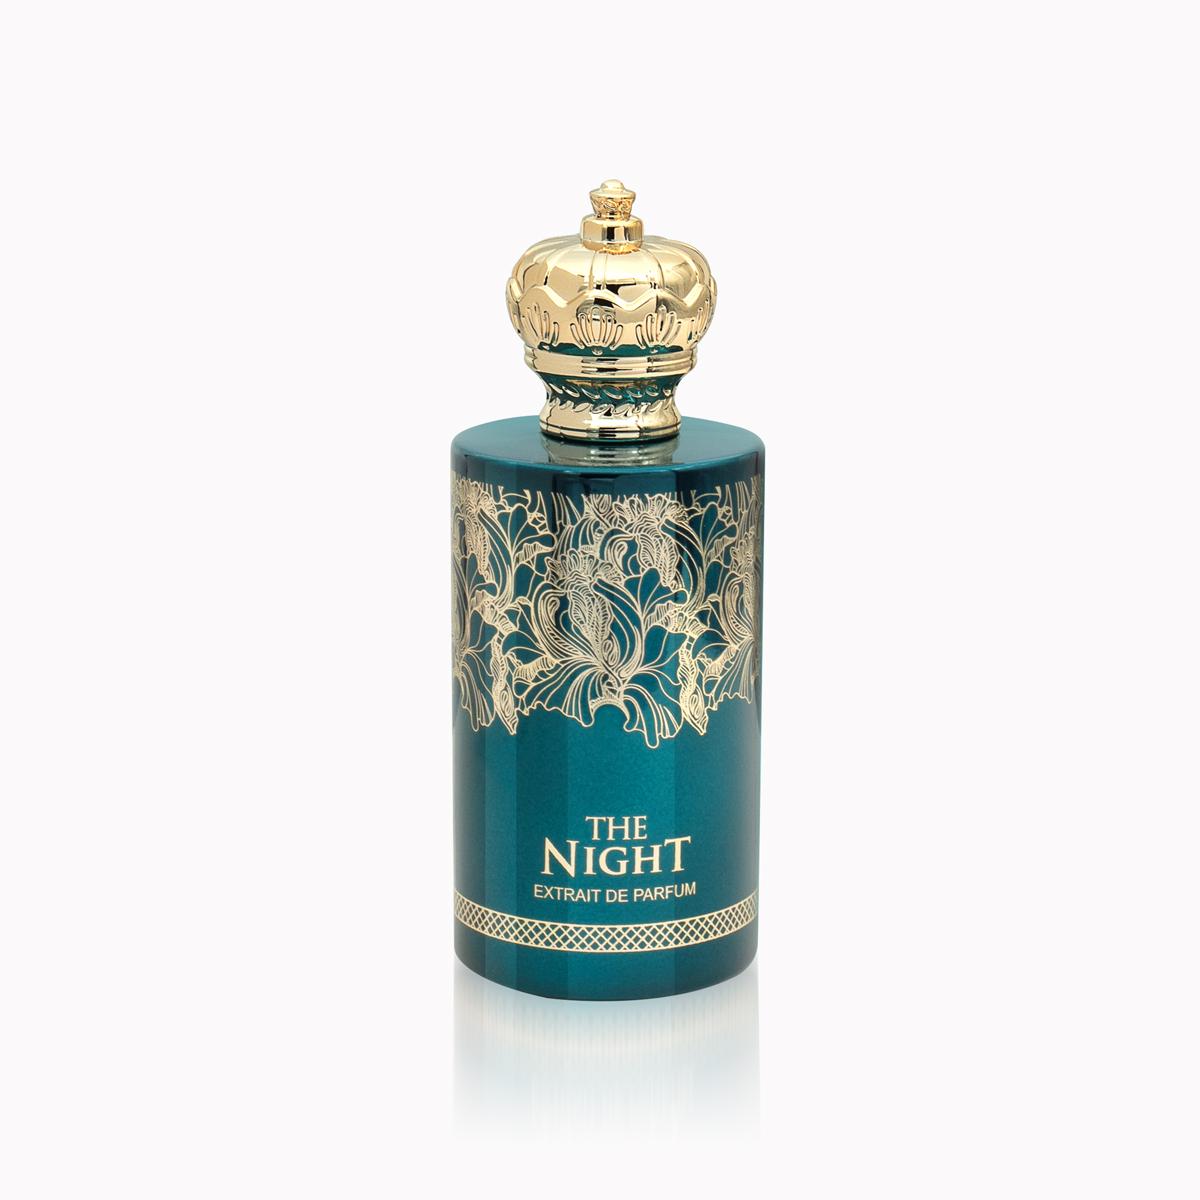 The Night Extrait De Parfum 60Ml By Fa Paris Niche (Fragrance World)